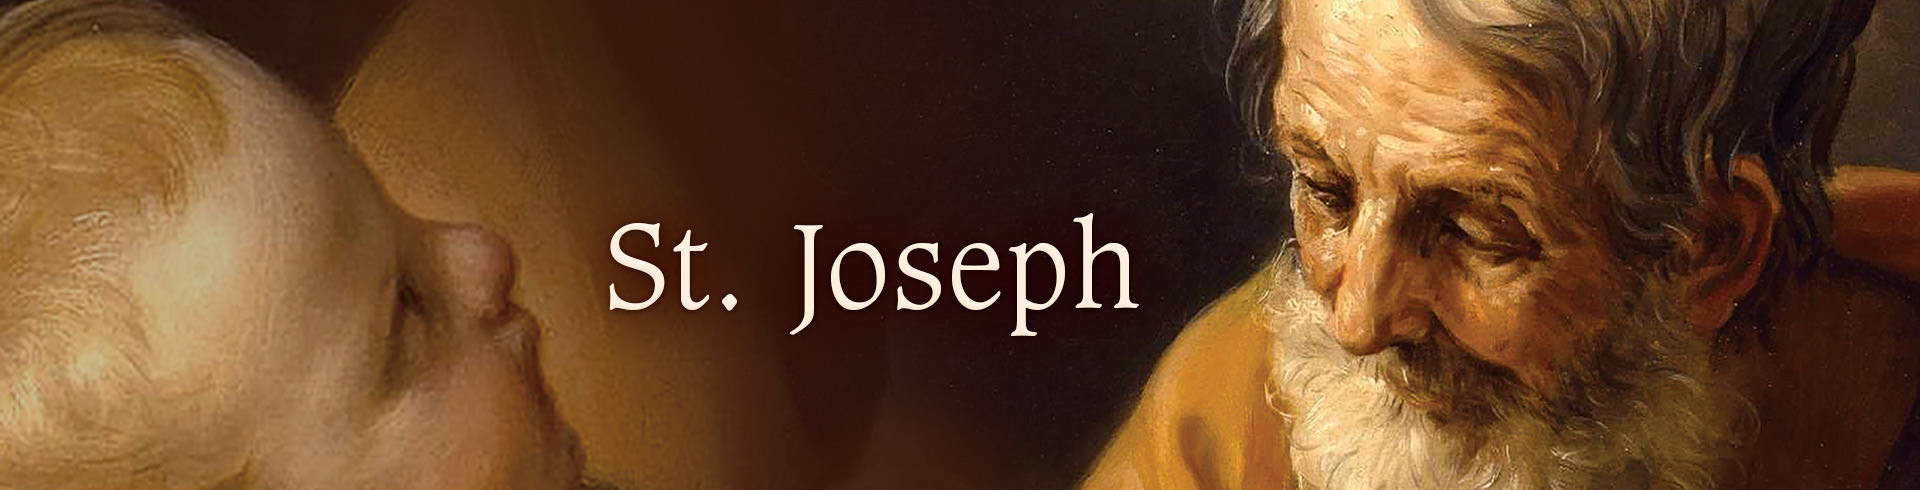 ST. JOSEPH